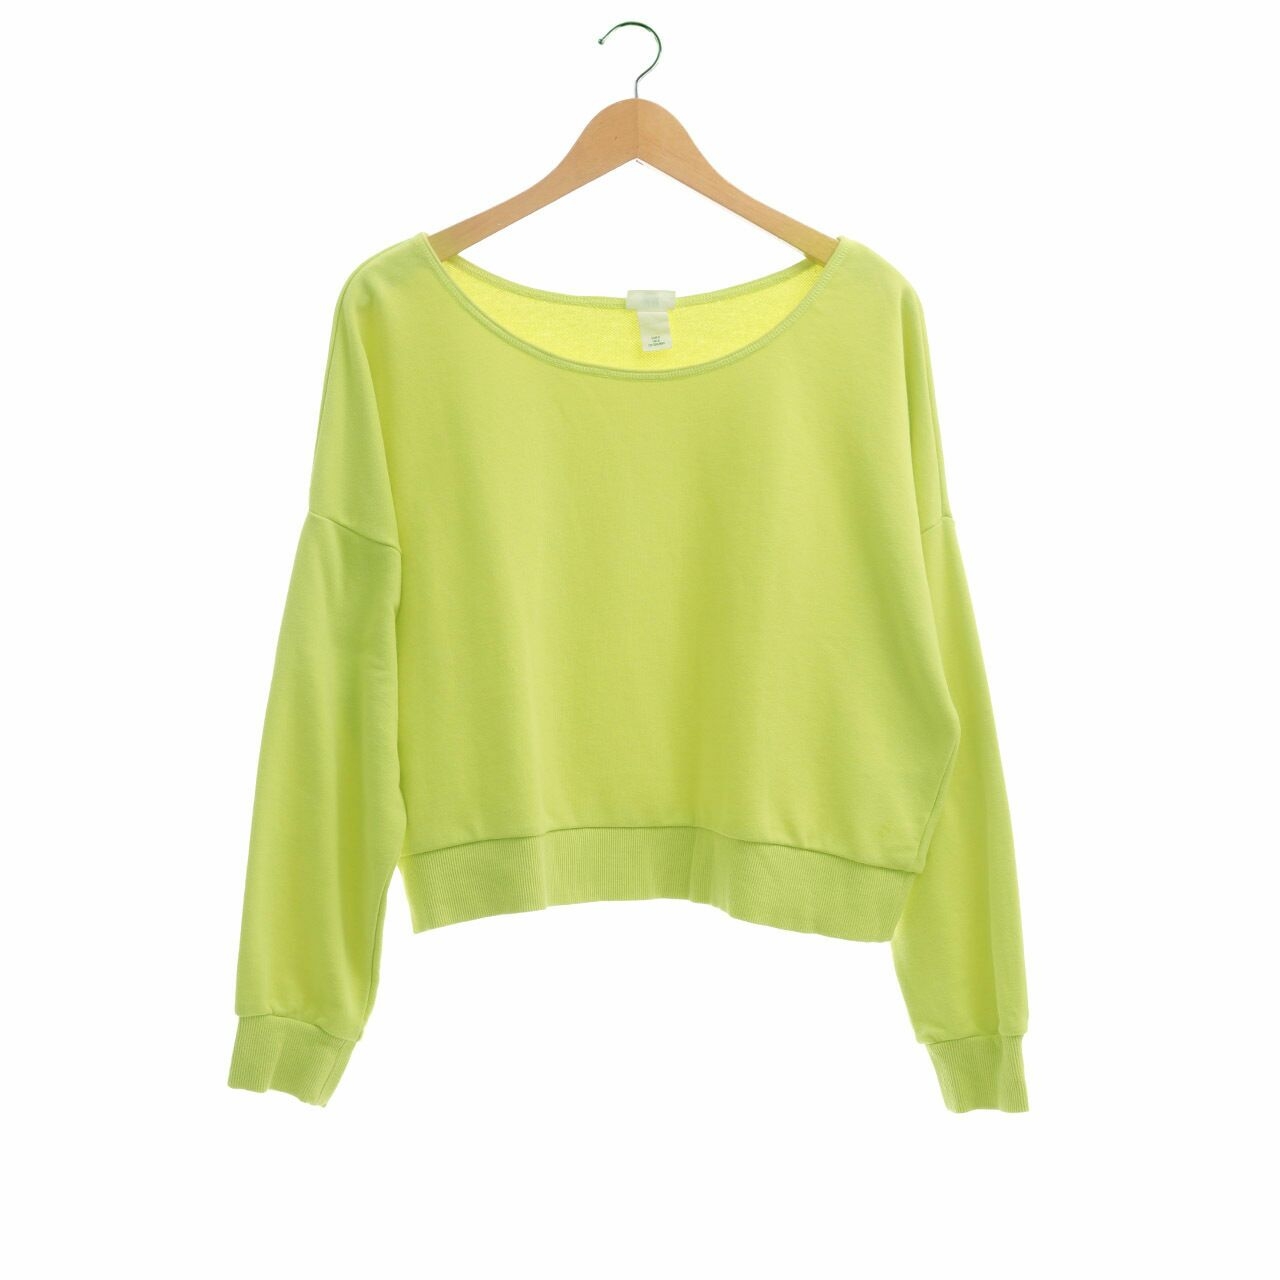 H&M Lime Crop Sweater